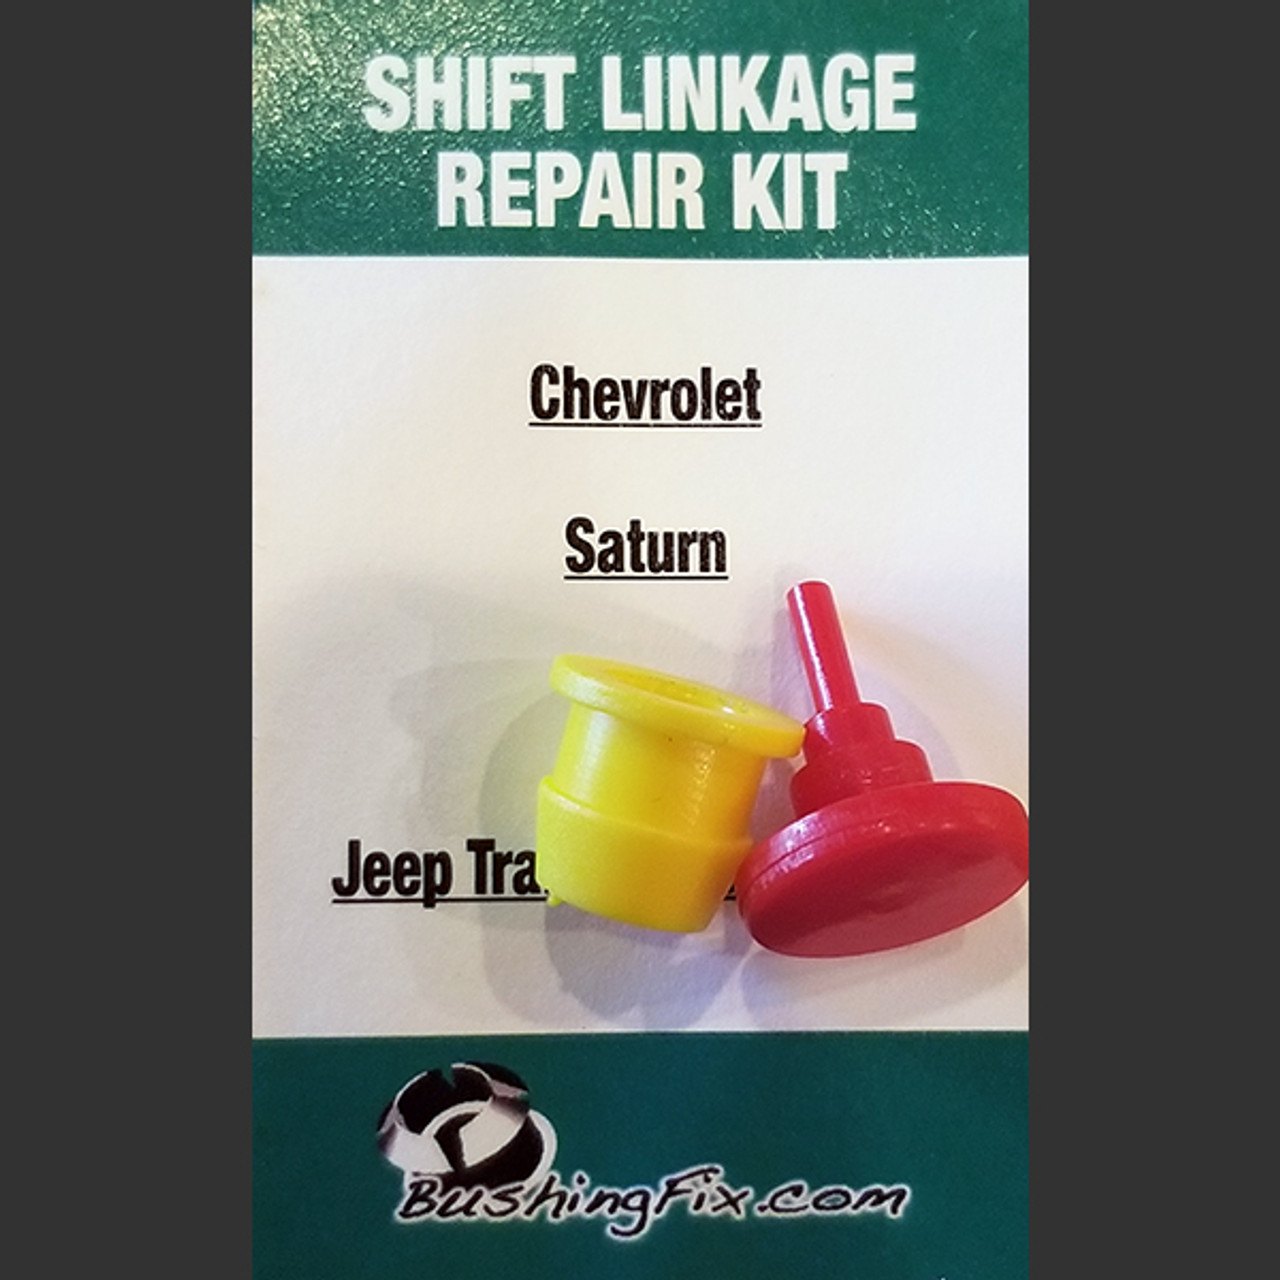 Pontiac G5 transmission shifter linkage repair kit